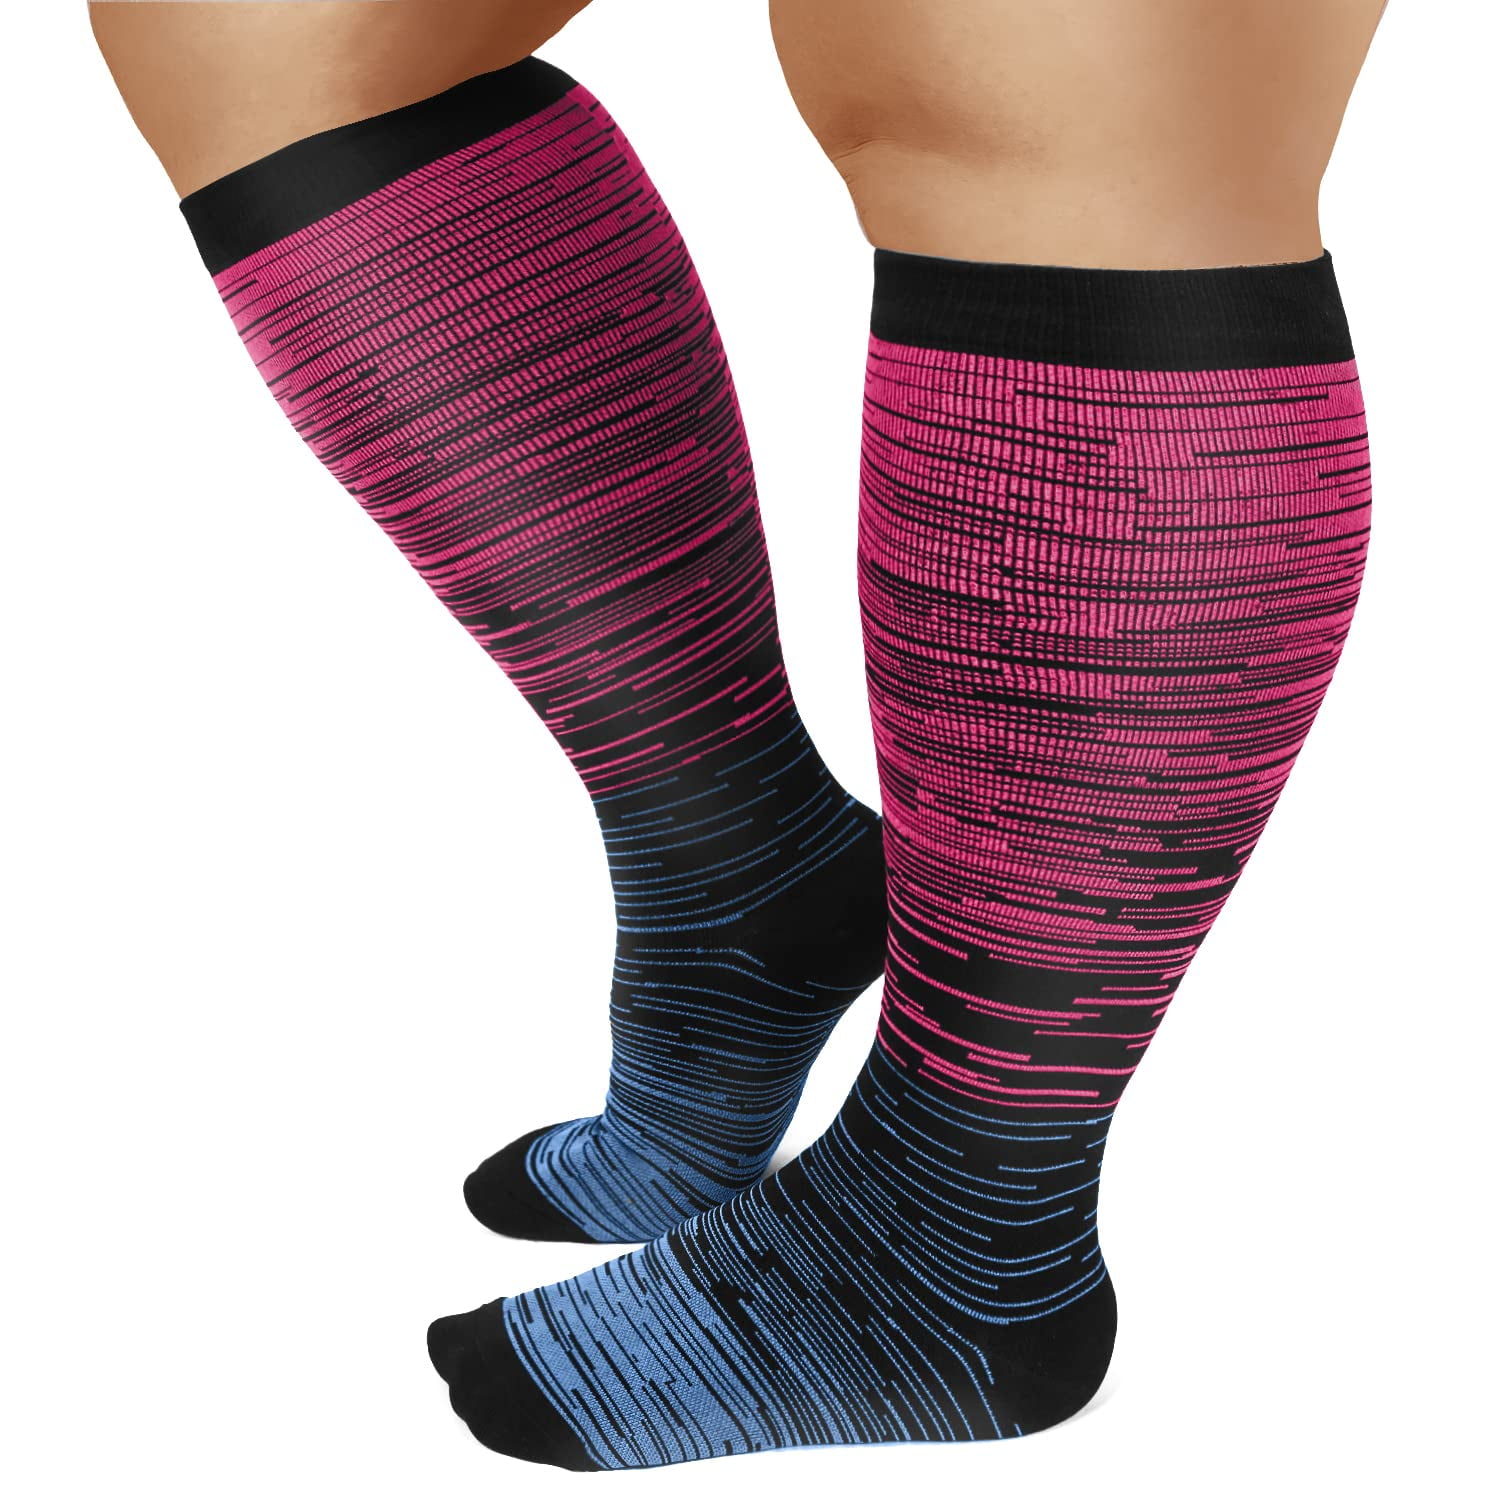 Zeta Socks XXXL Wide Plus Size Calf Compression, Soothing Comfy